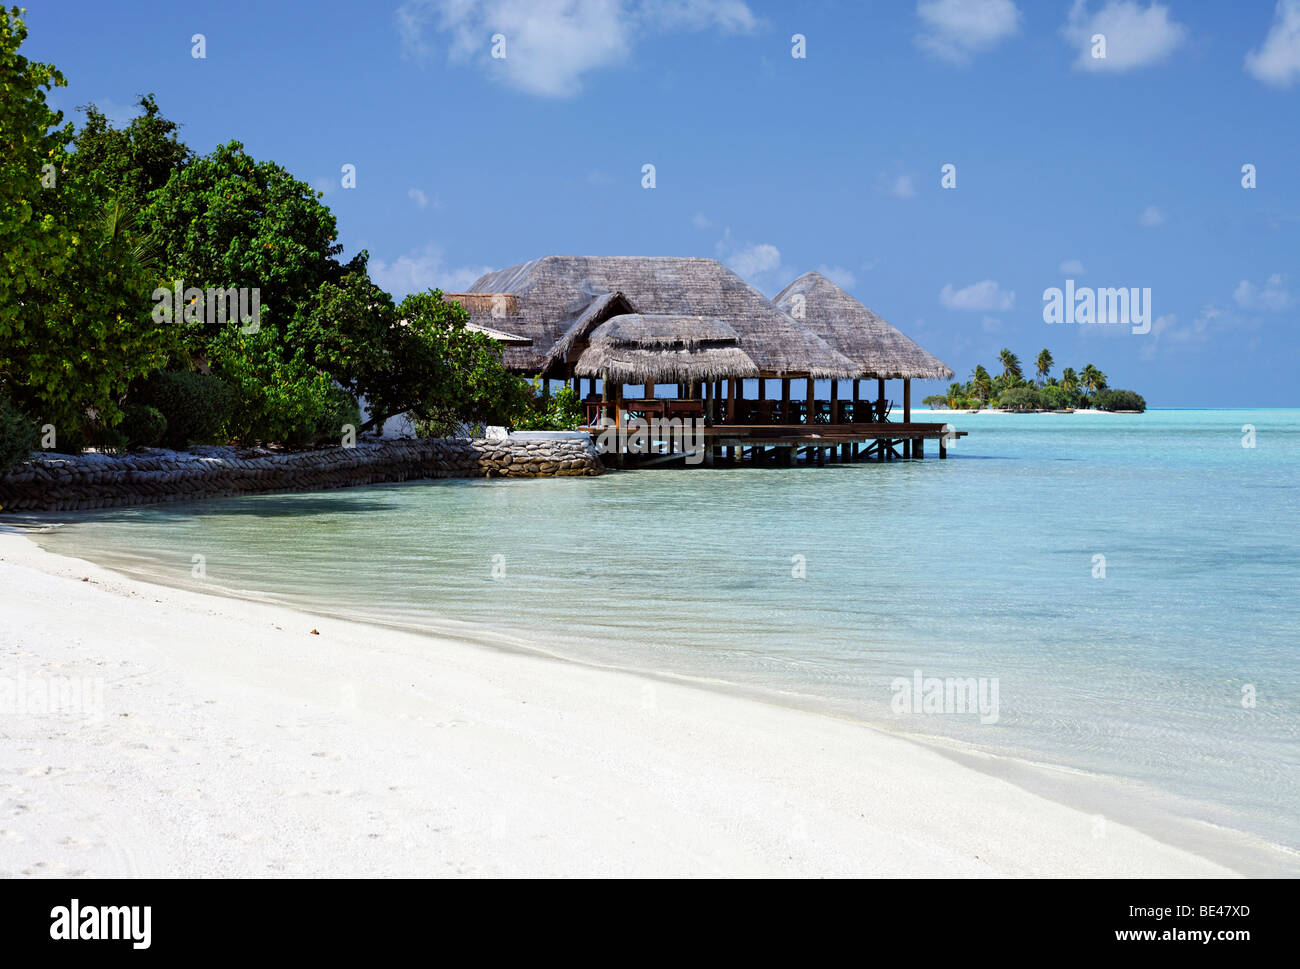 Beach, palm trees, restaurant, lagoon, sea, Maldive island, Rihiveli, South Male Atoll, Island, Maldives, Archipelago, Indian O Stock Photo